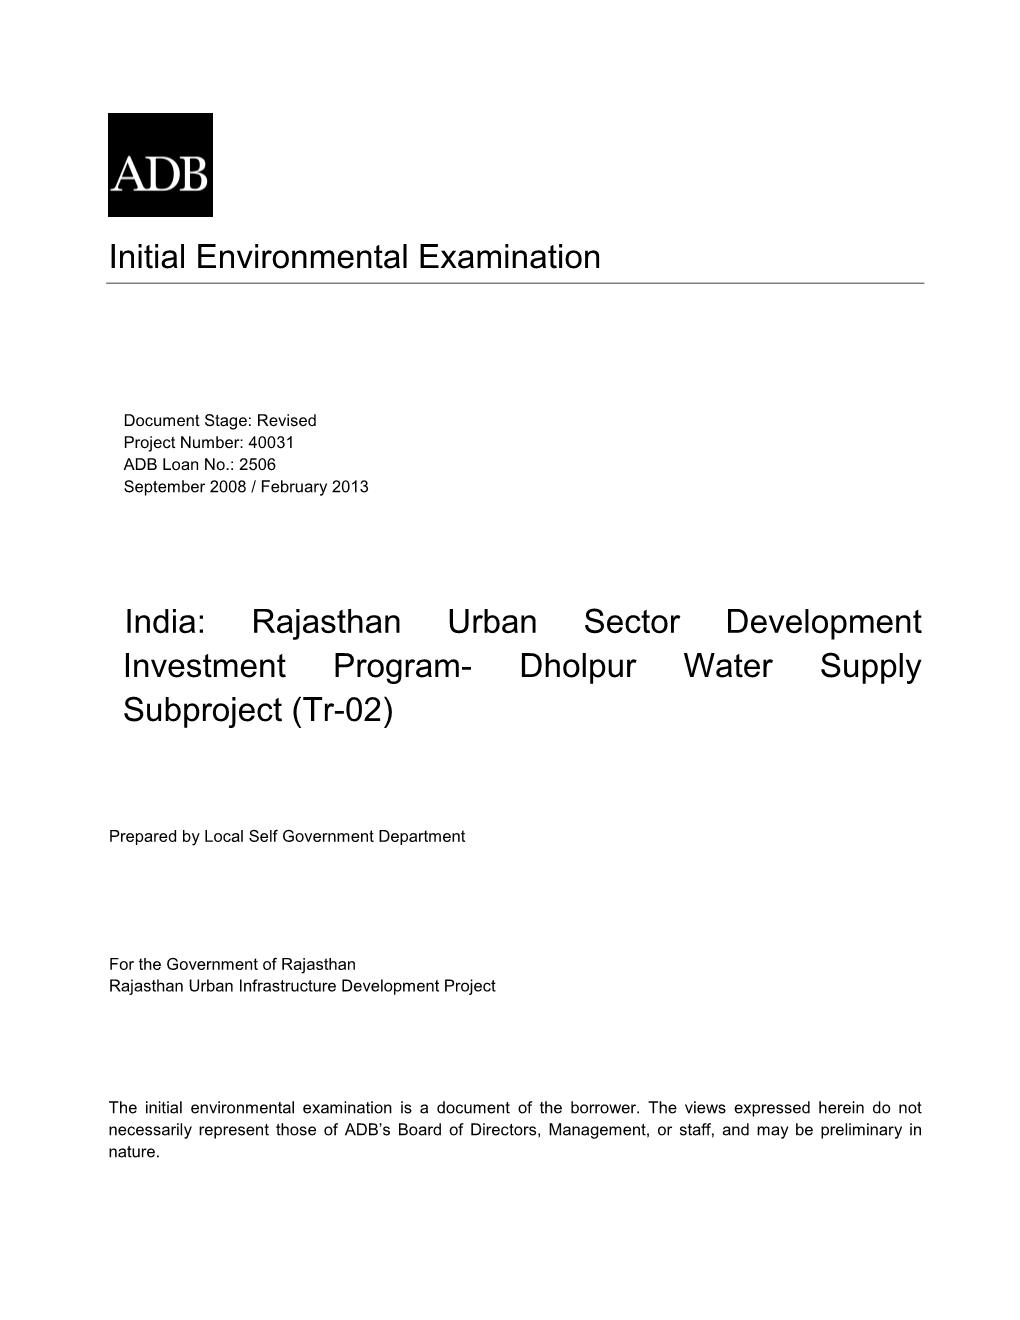 IEE: India: Rajasthan Urban Sector Development Investment Program